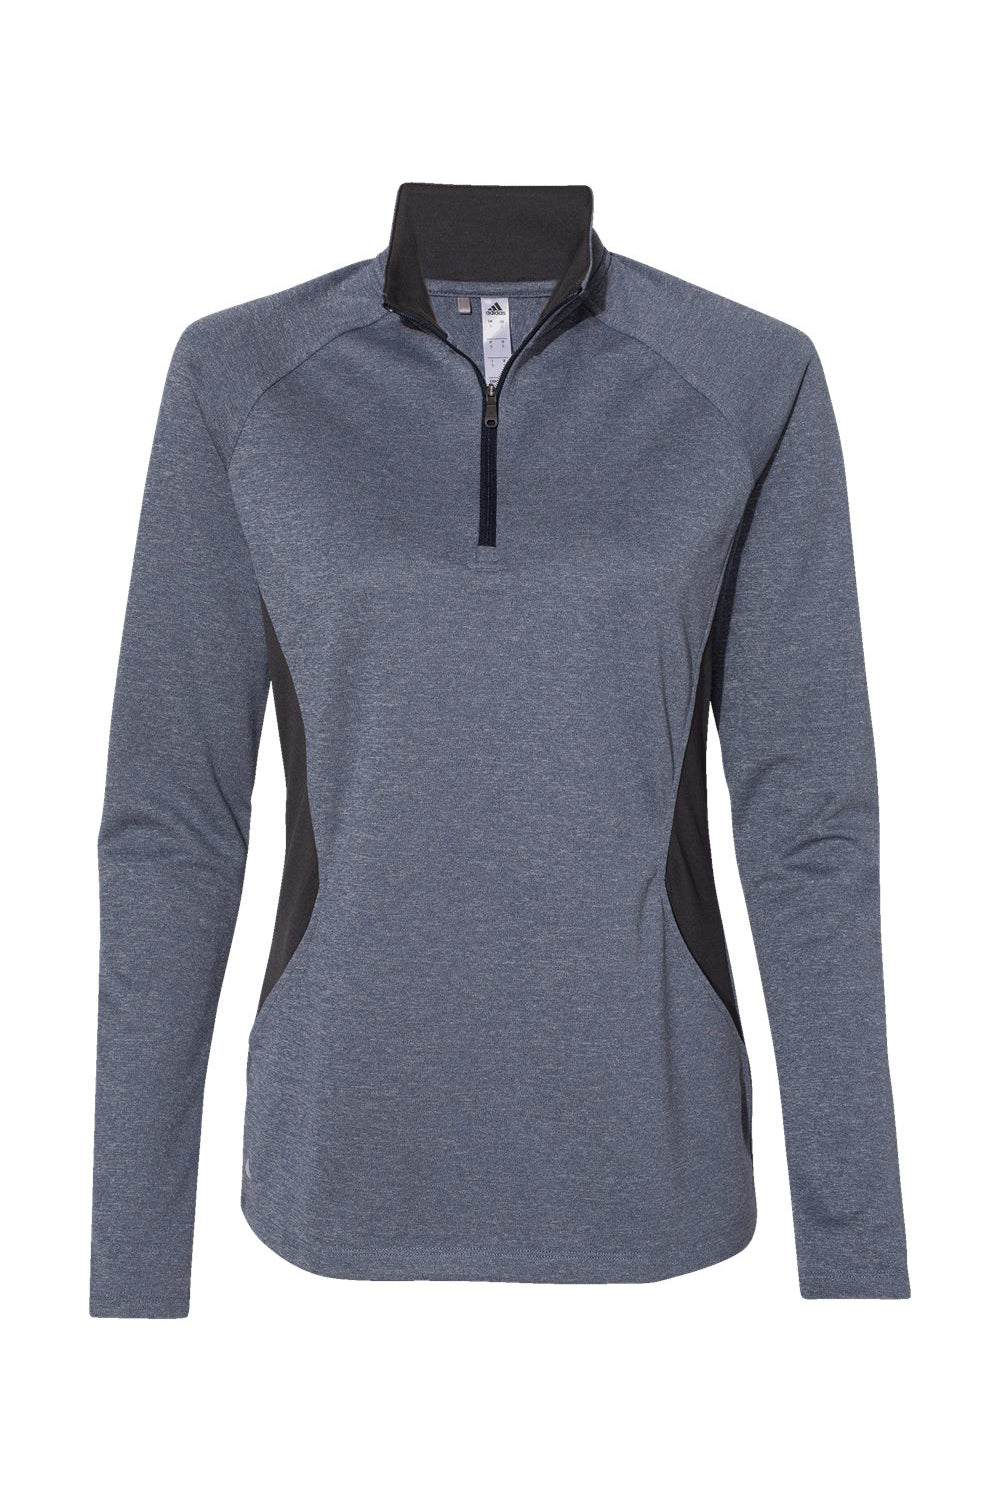 Adidas A281 Womens UPF 50+ 1/4 Zip Sweatshirt Heather Collegiate Navy Blue/Carbon Grey Flat Front